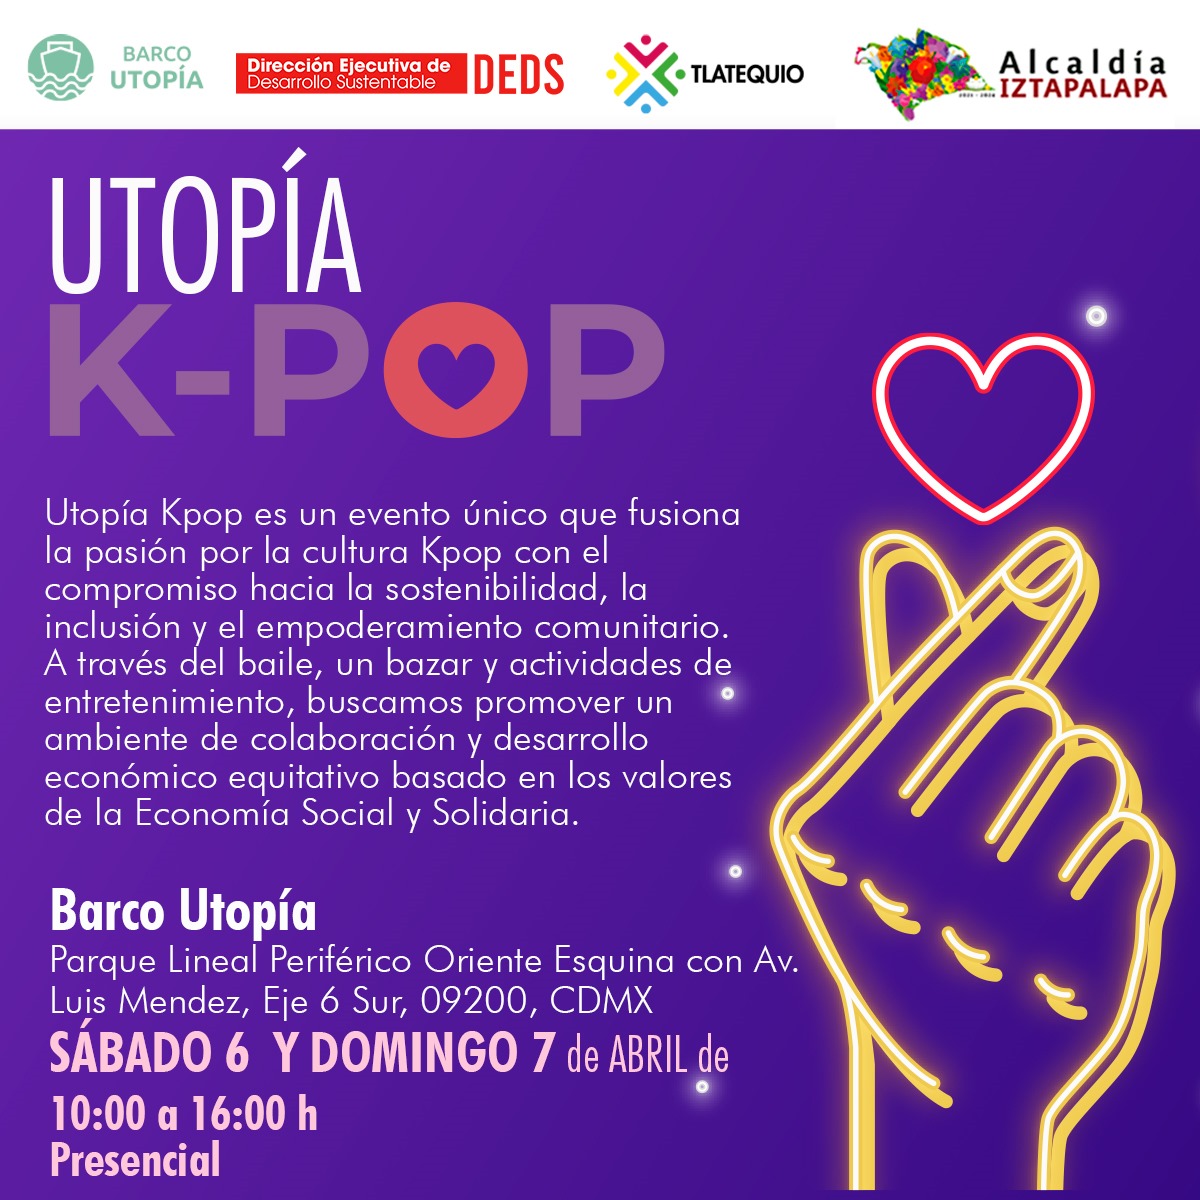 Utopia Kpop